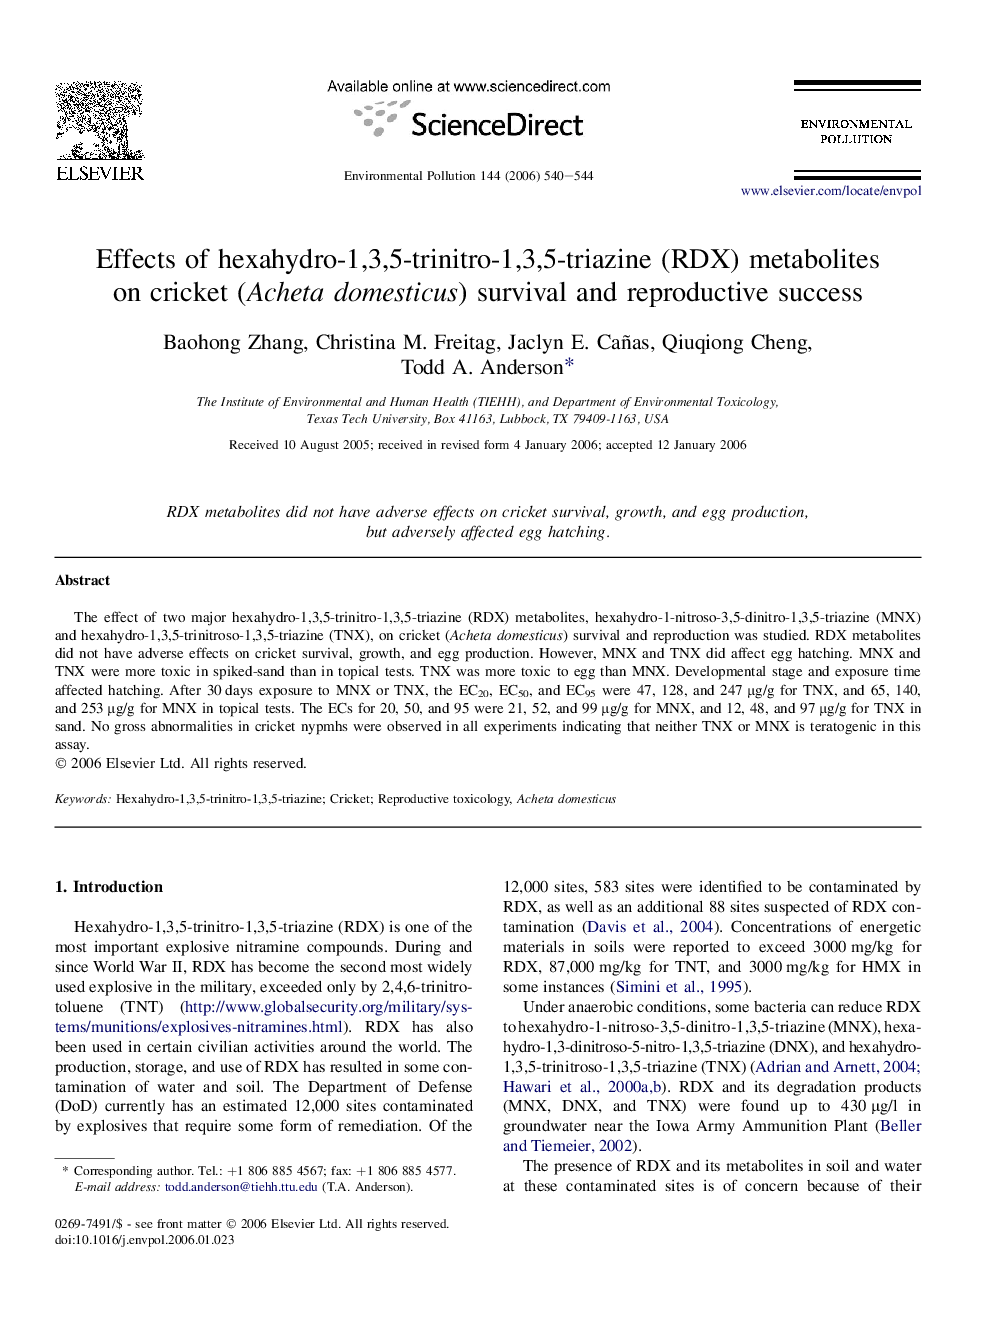 Effects of hexahydro-1,3,5-trinitro-1,3,5-triazine (RDX) metabolites on cricket (Acheta domesticus) survival and reproductive success